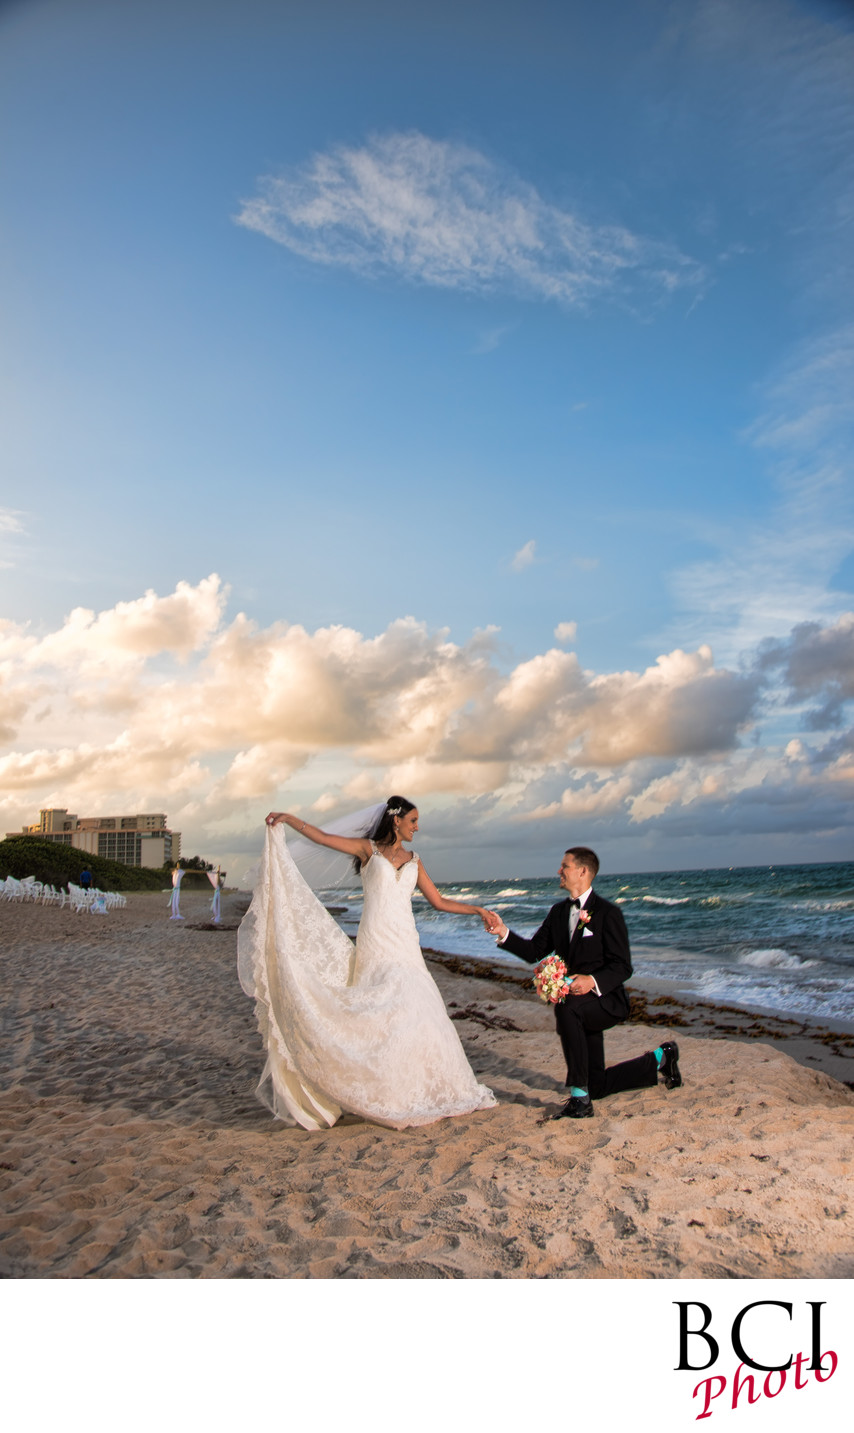 First wedding dance on the beach portrait